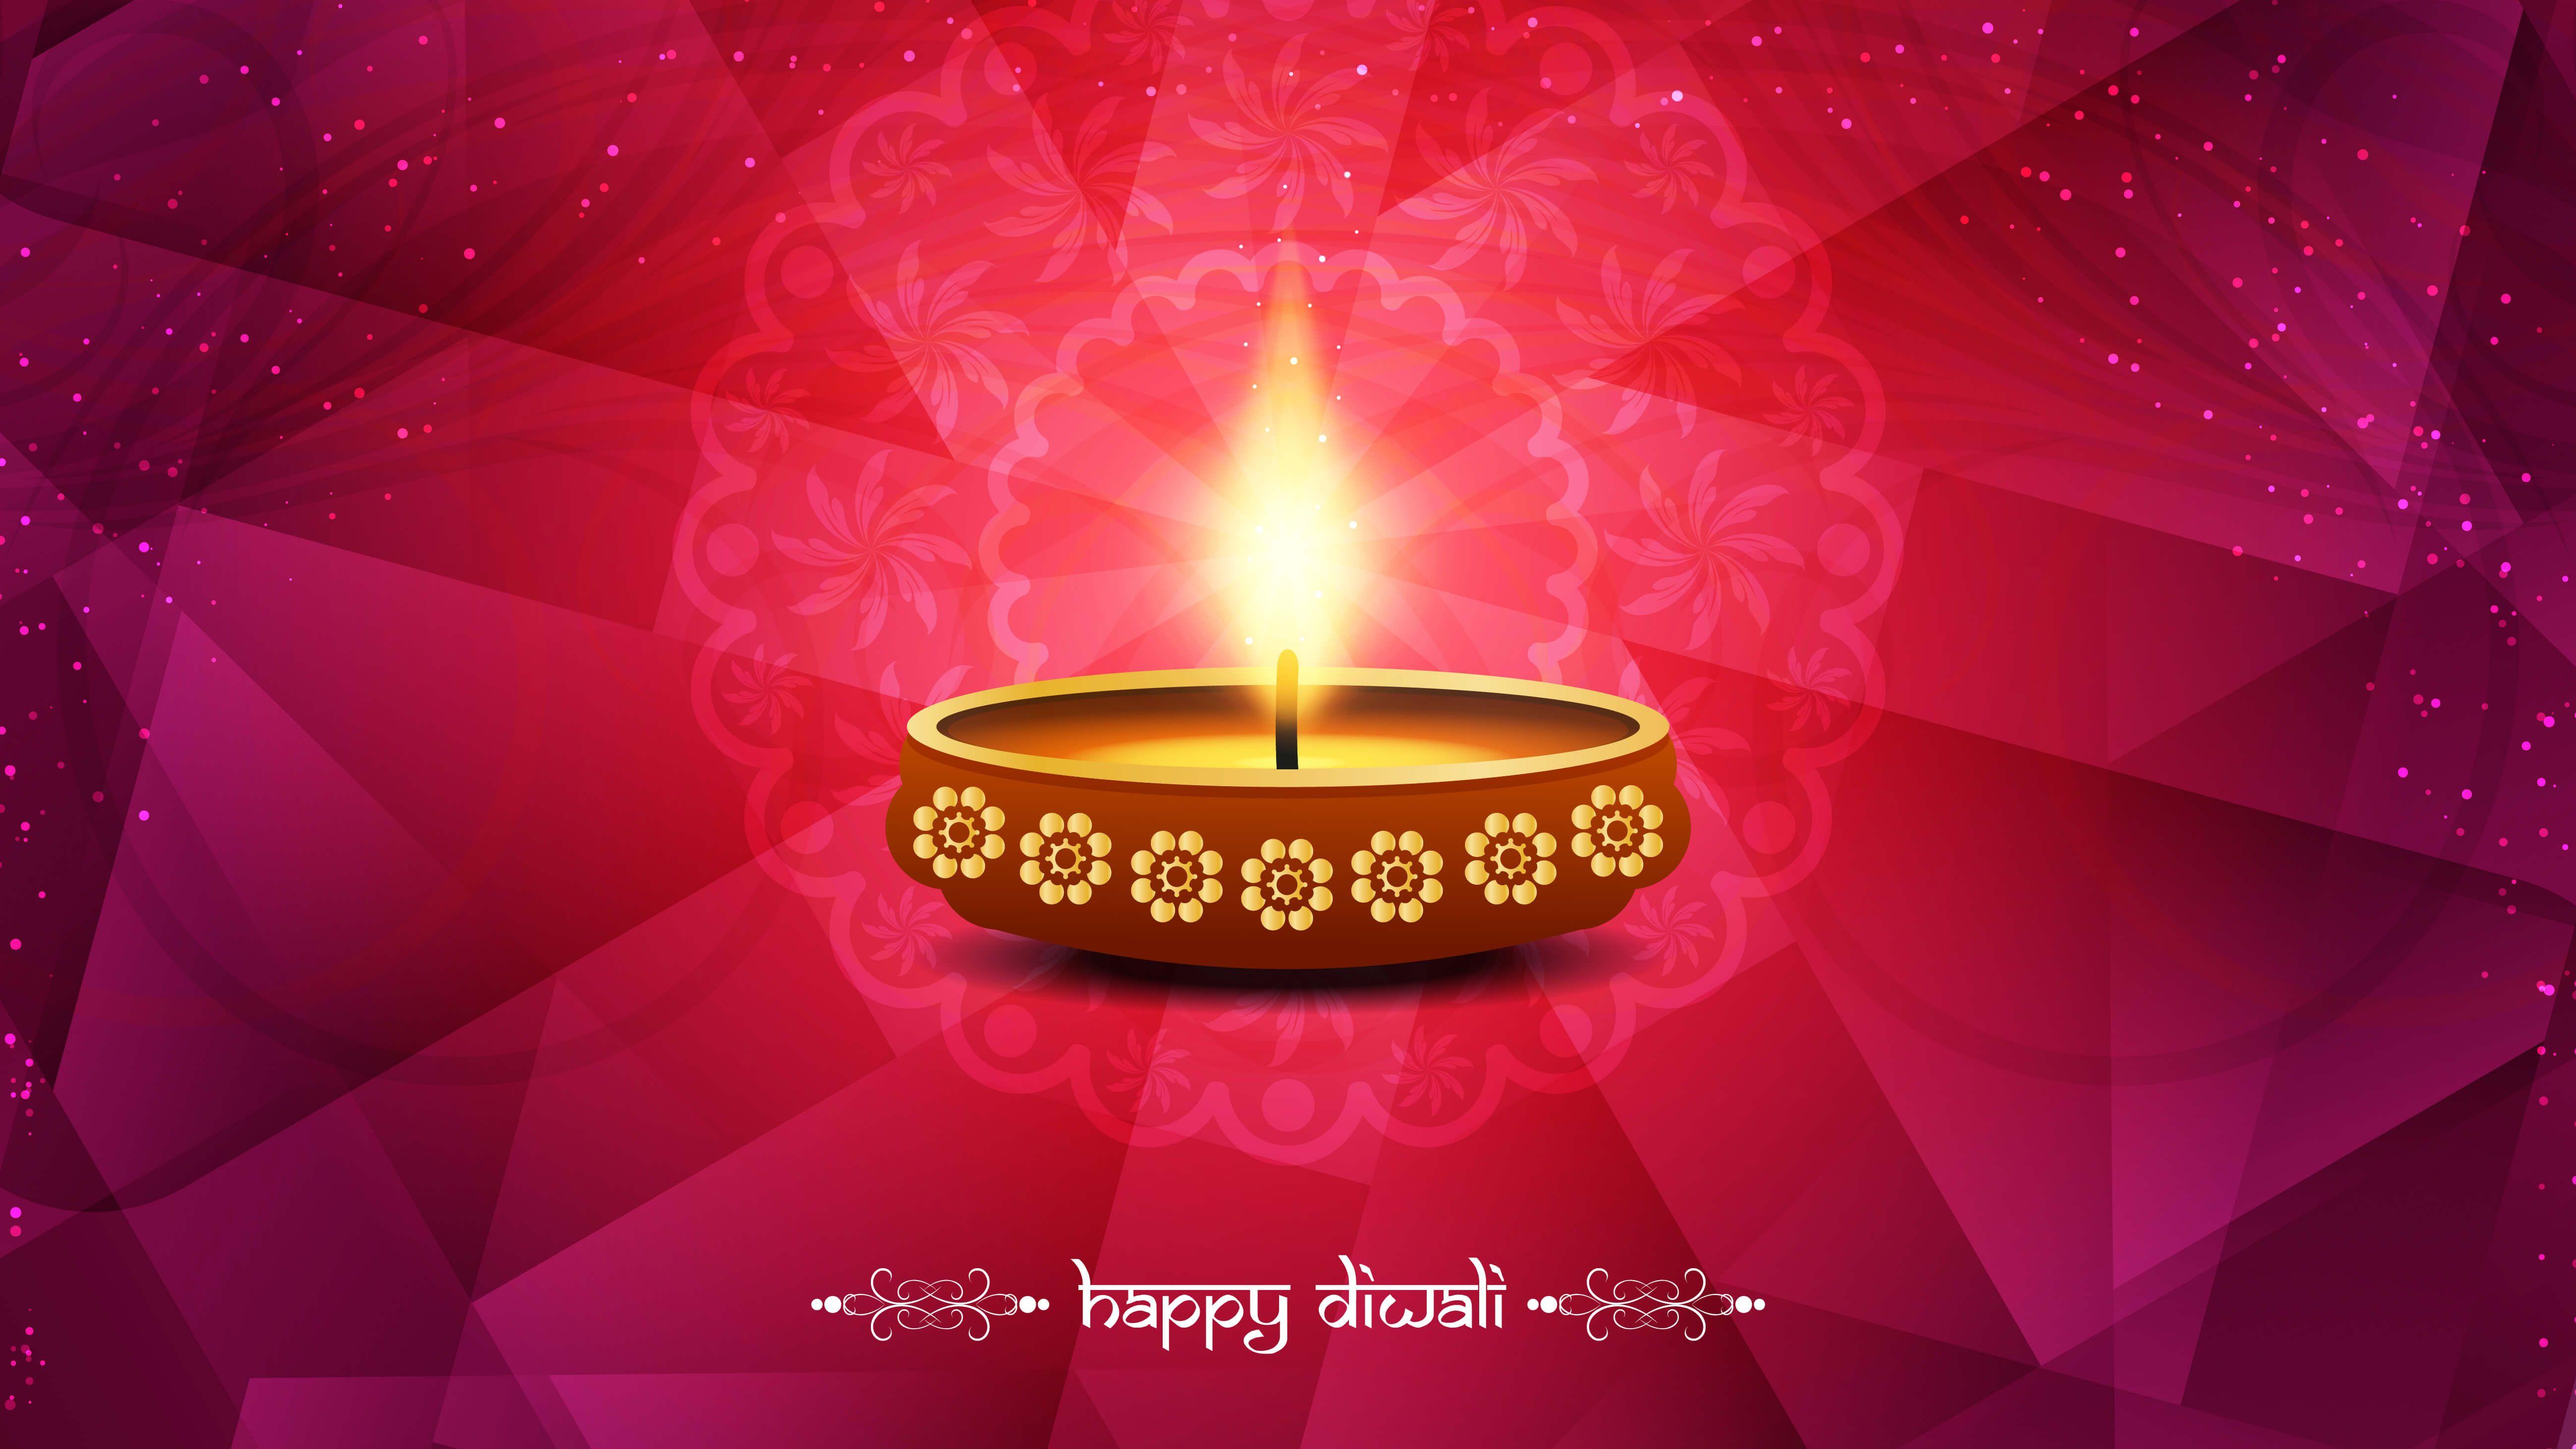 Wallpaper Happy Diwali, HD, 4K, 5K, Indian Festivals, Celebrations